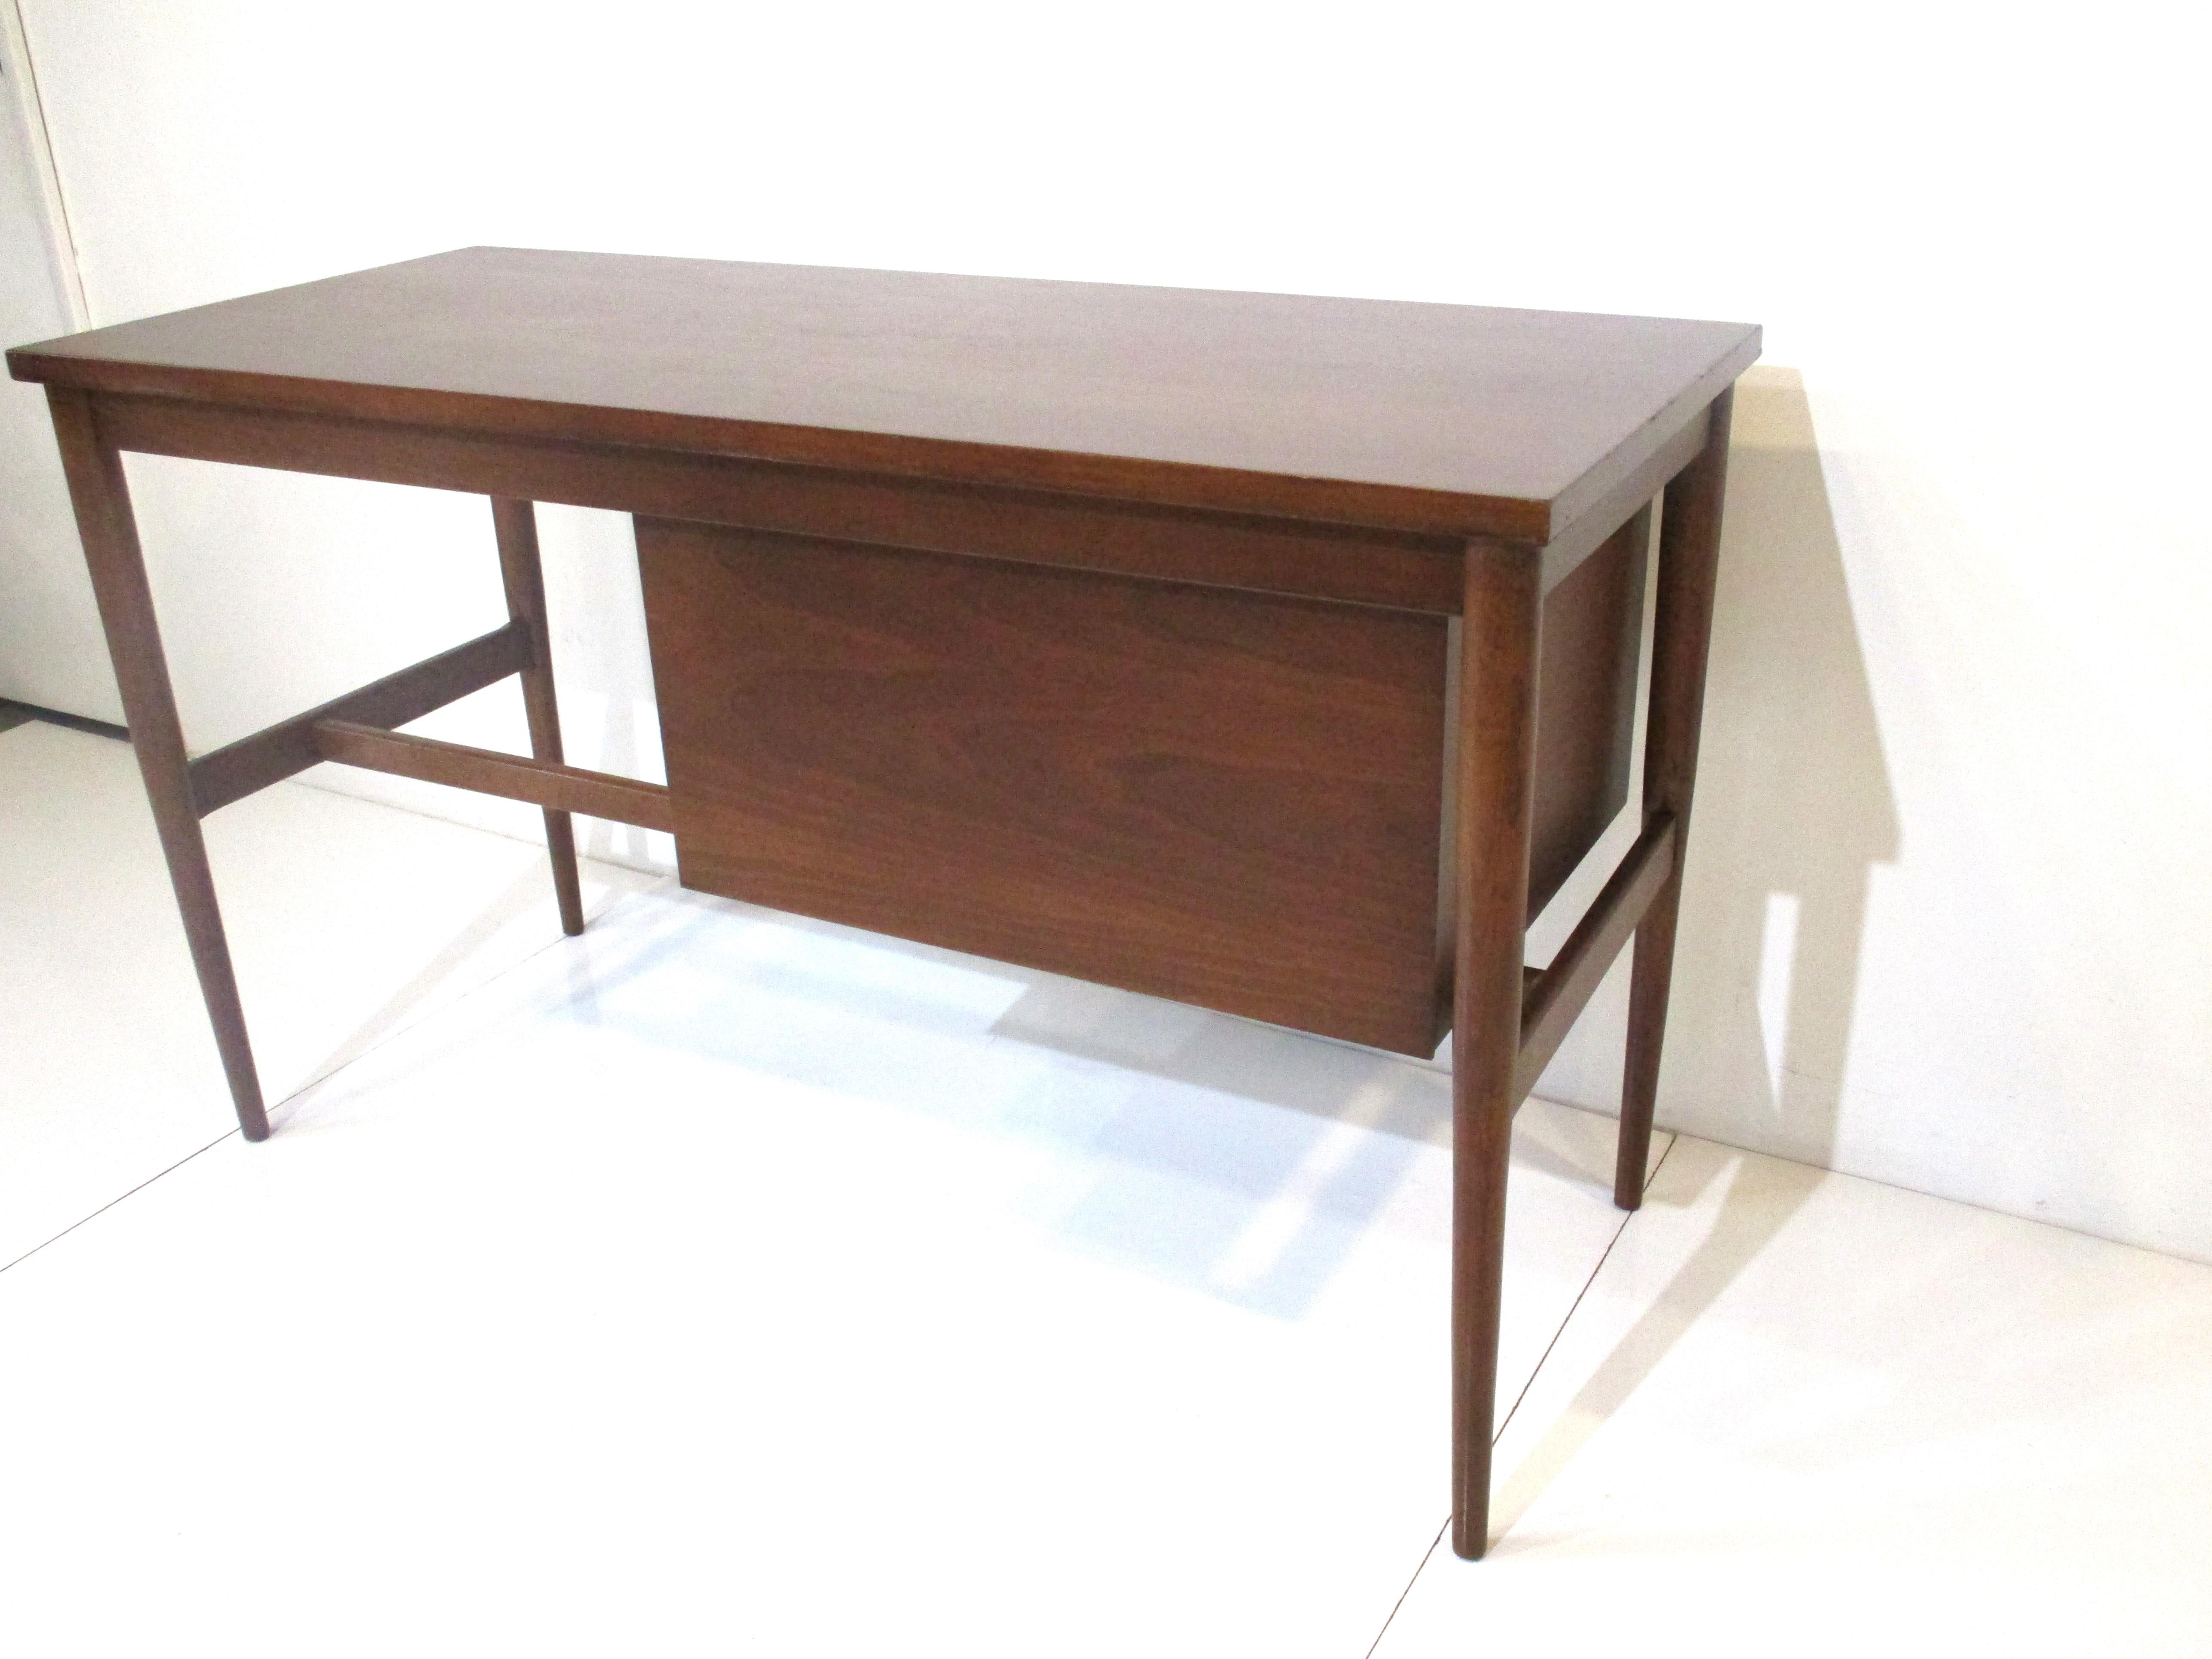 20th Century Mid-Century Desk by the Bassett Furniture Co